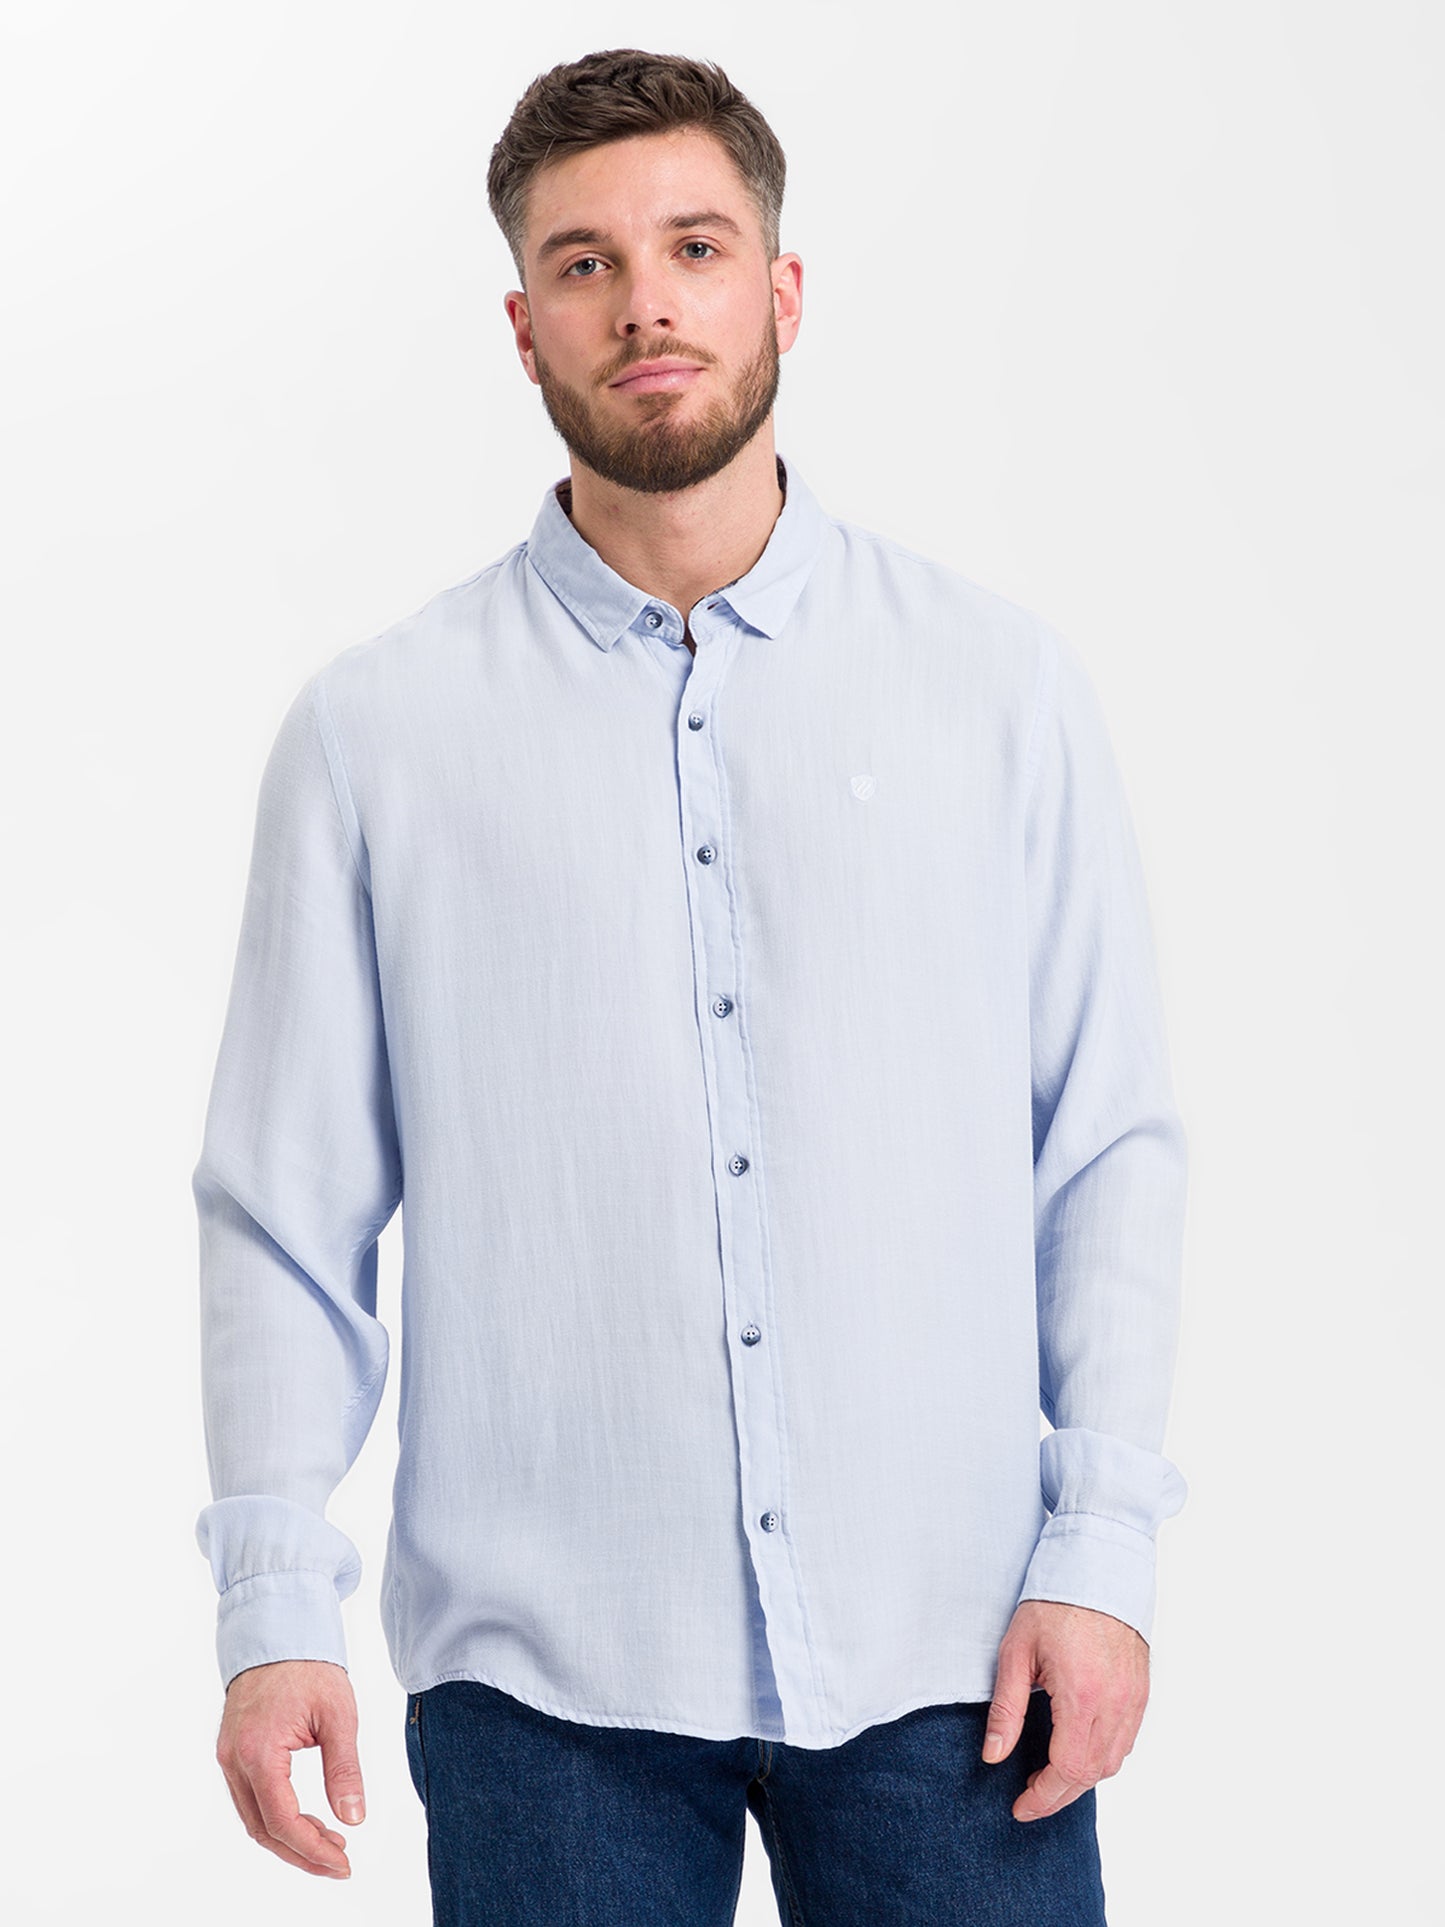 Men's regular long-sleeved shirt light blue with a patterned collar